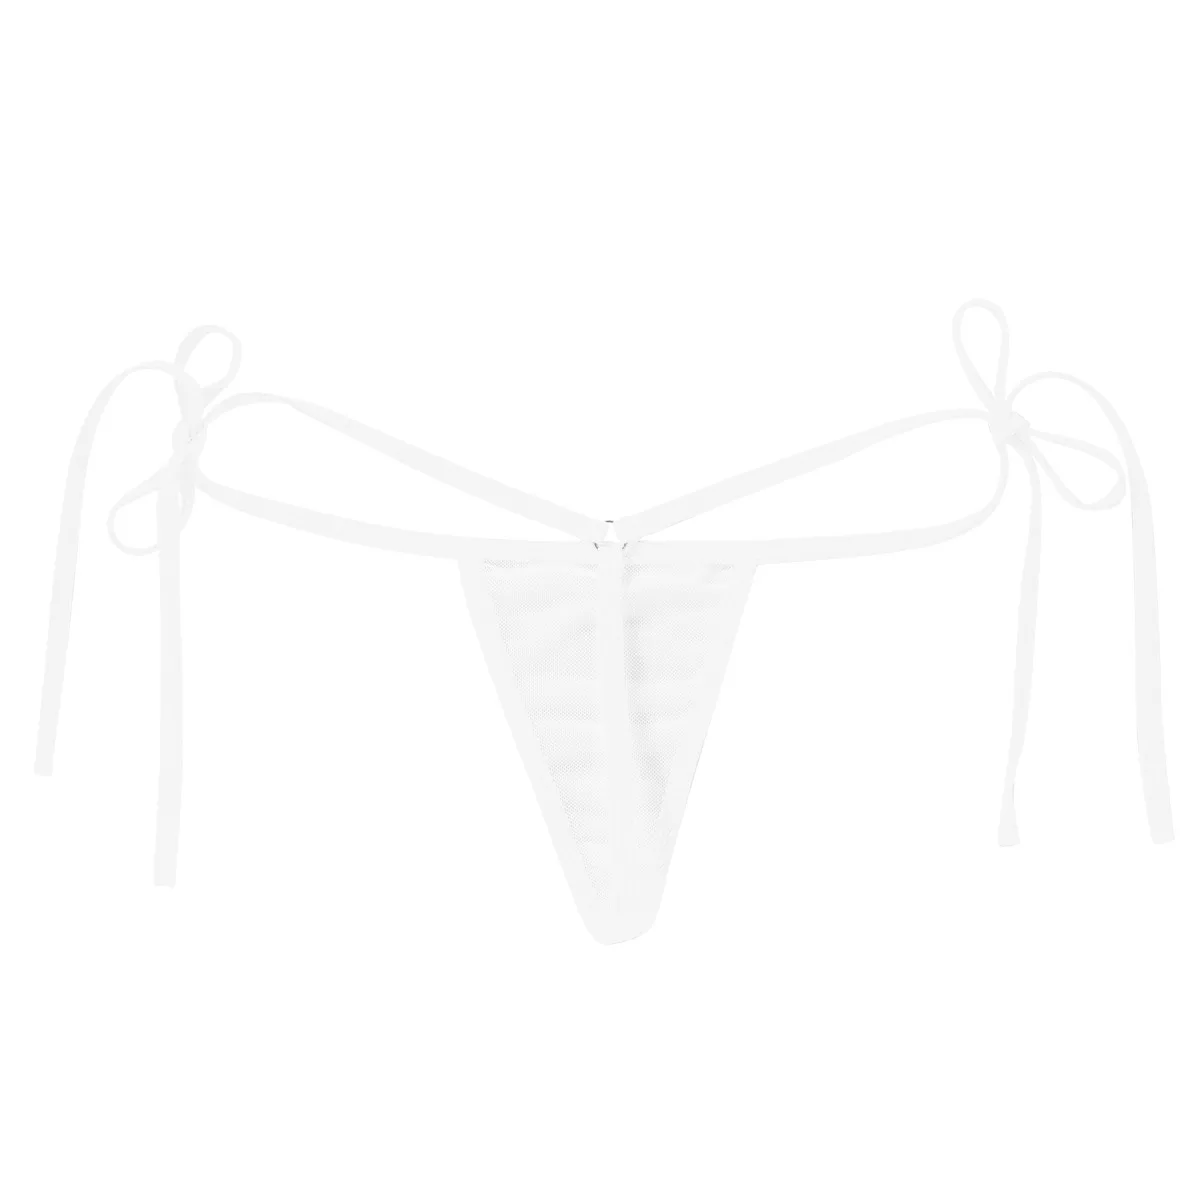 Hot Womens Mesh See Through Sheer Sissy Brazilian Panties Lingerie Low Rise Mini Thong Tie-Side Panties Bikini Briefs Underwear